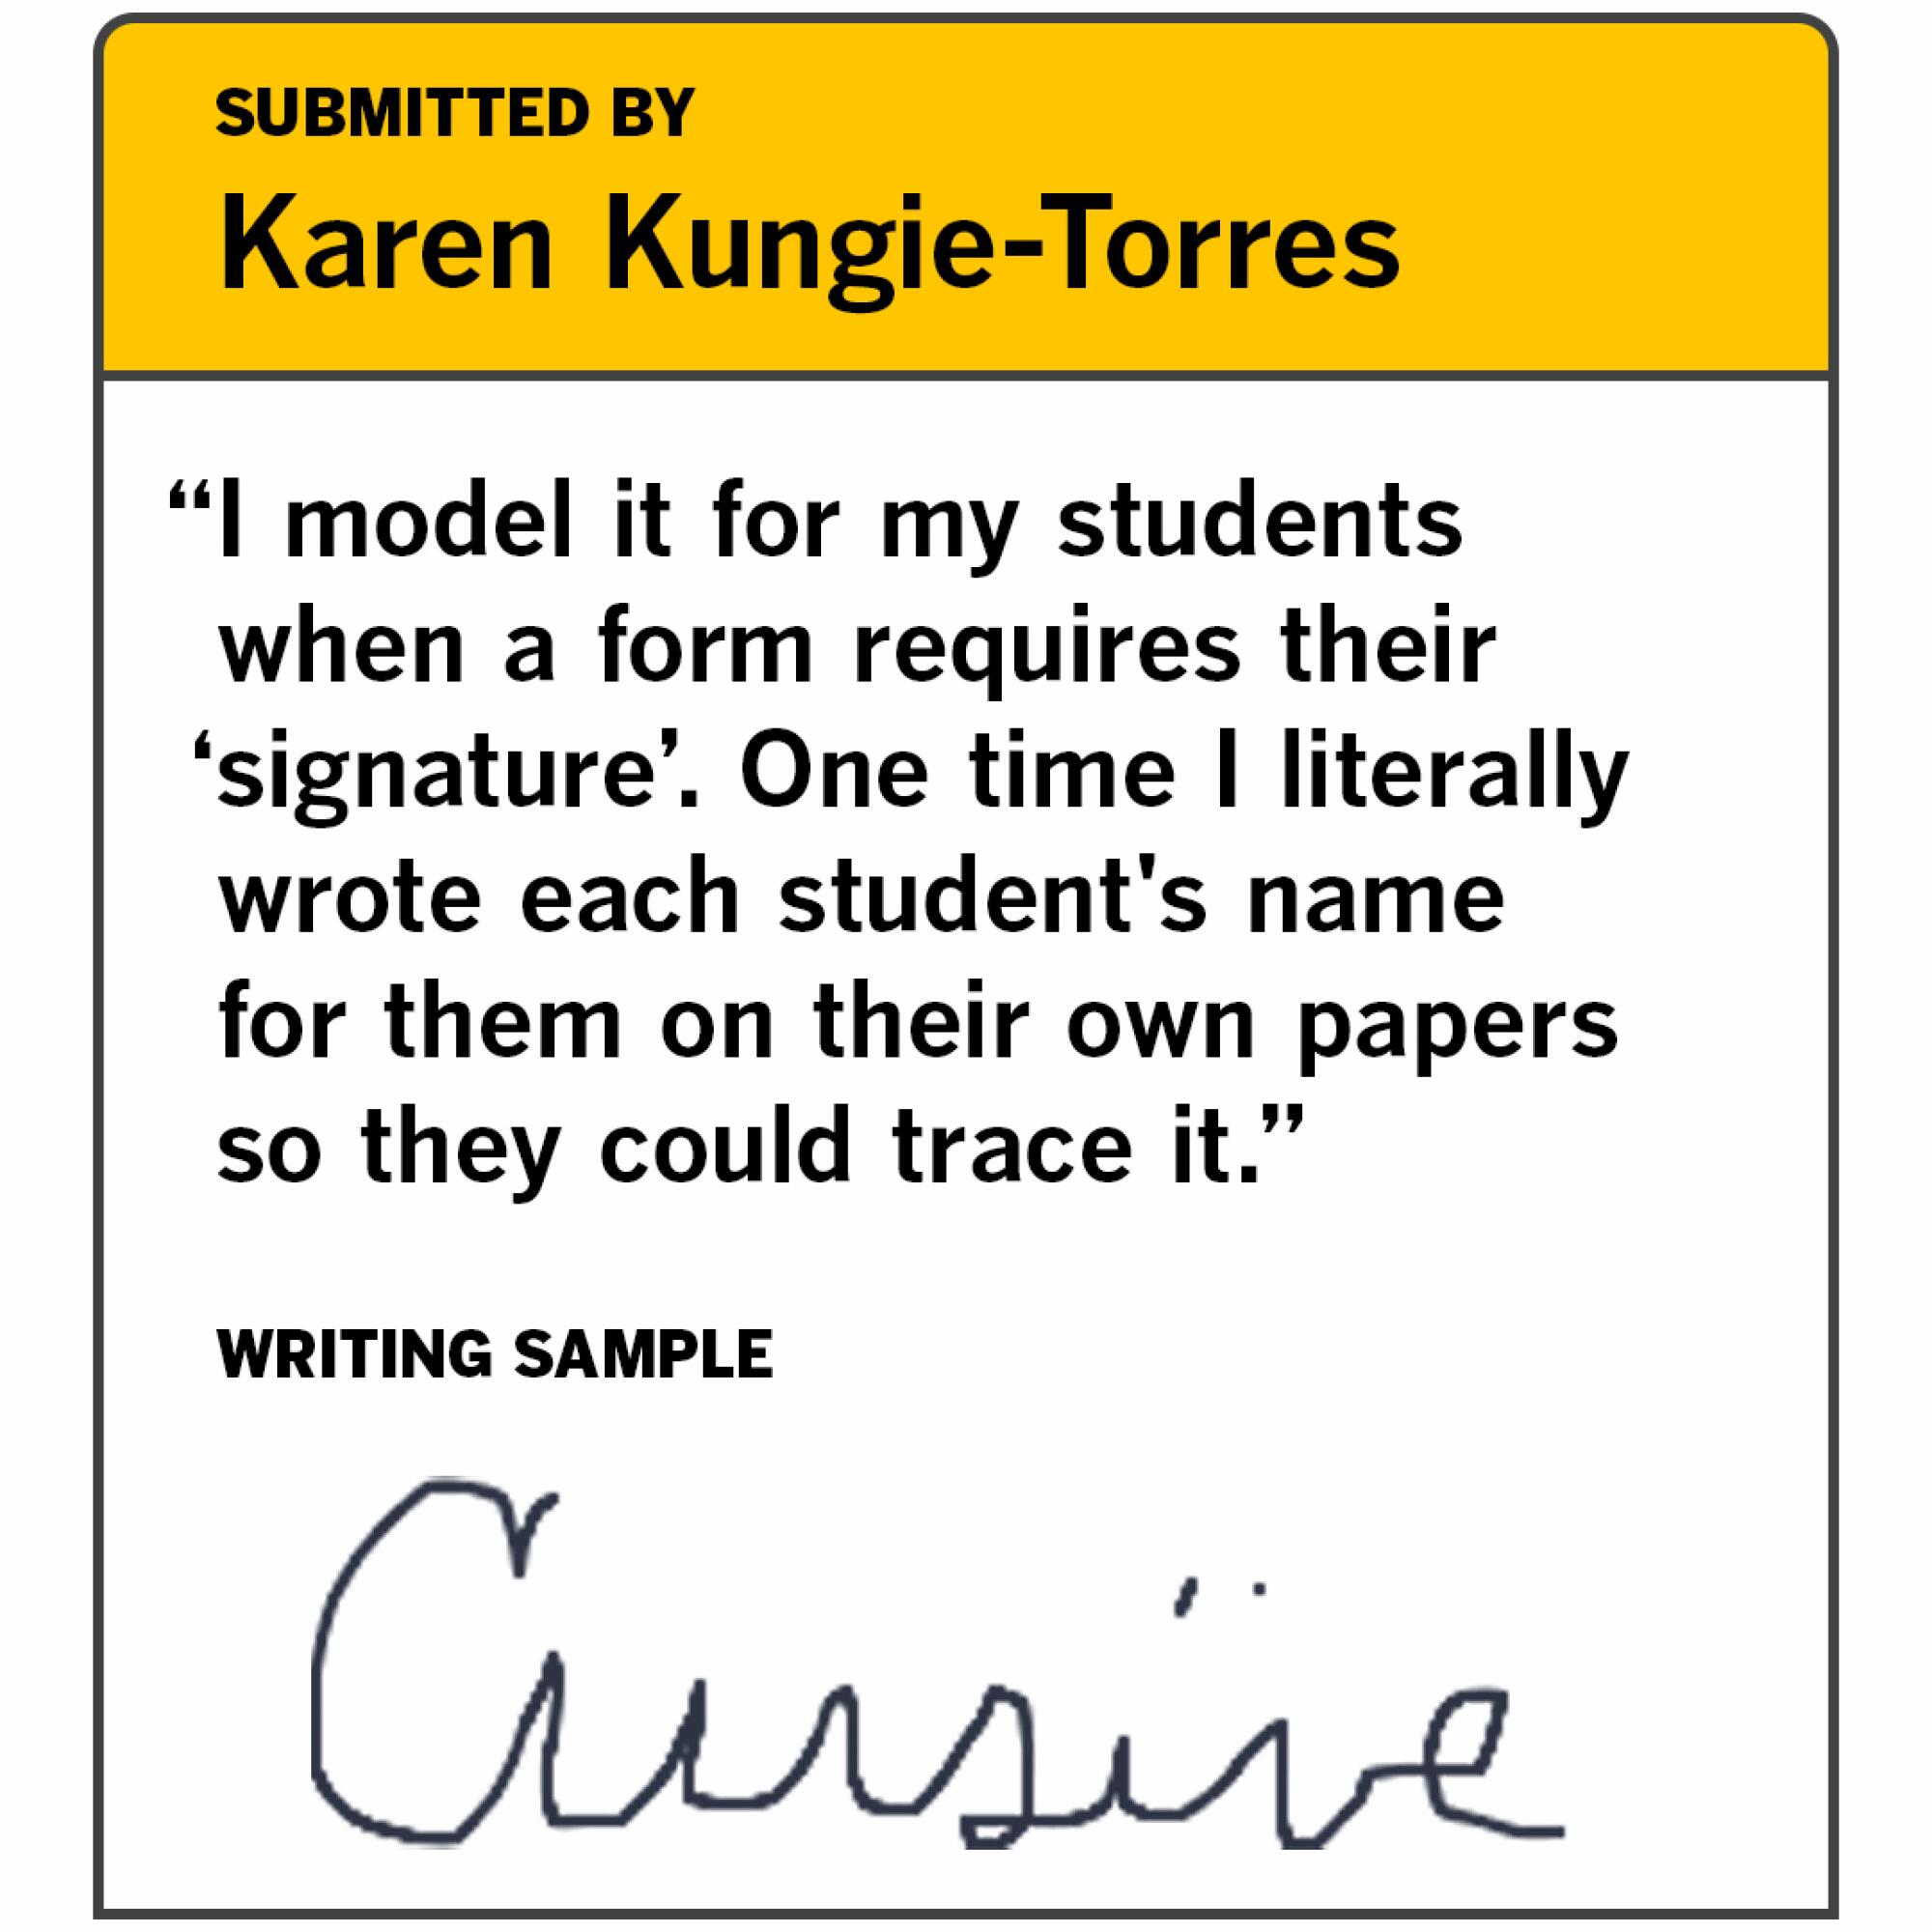 Cursive writing example from Karen Kungie-Torres